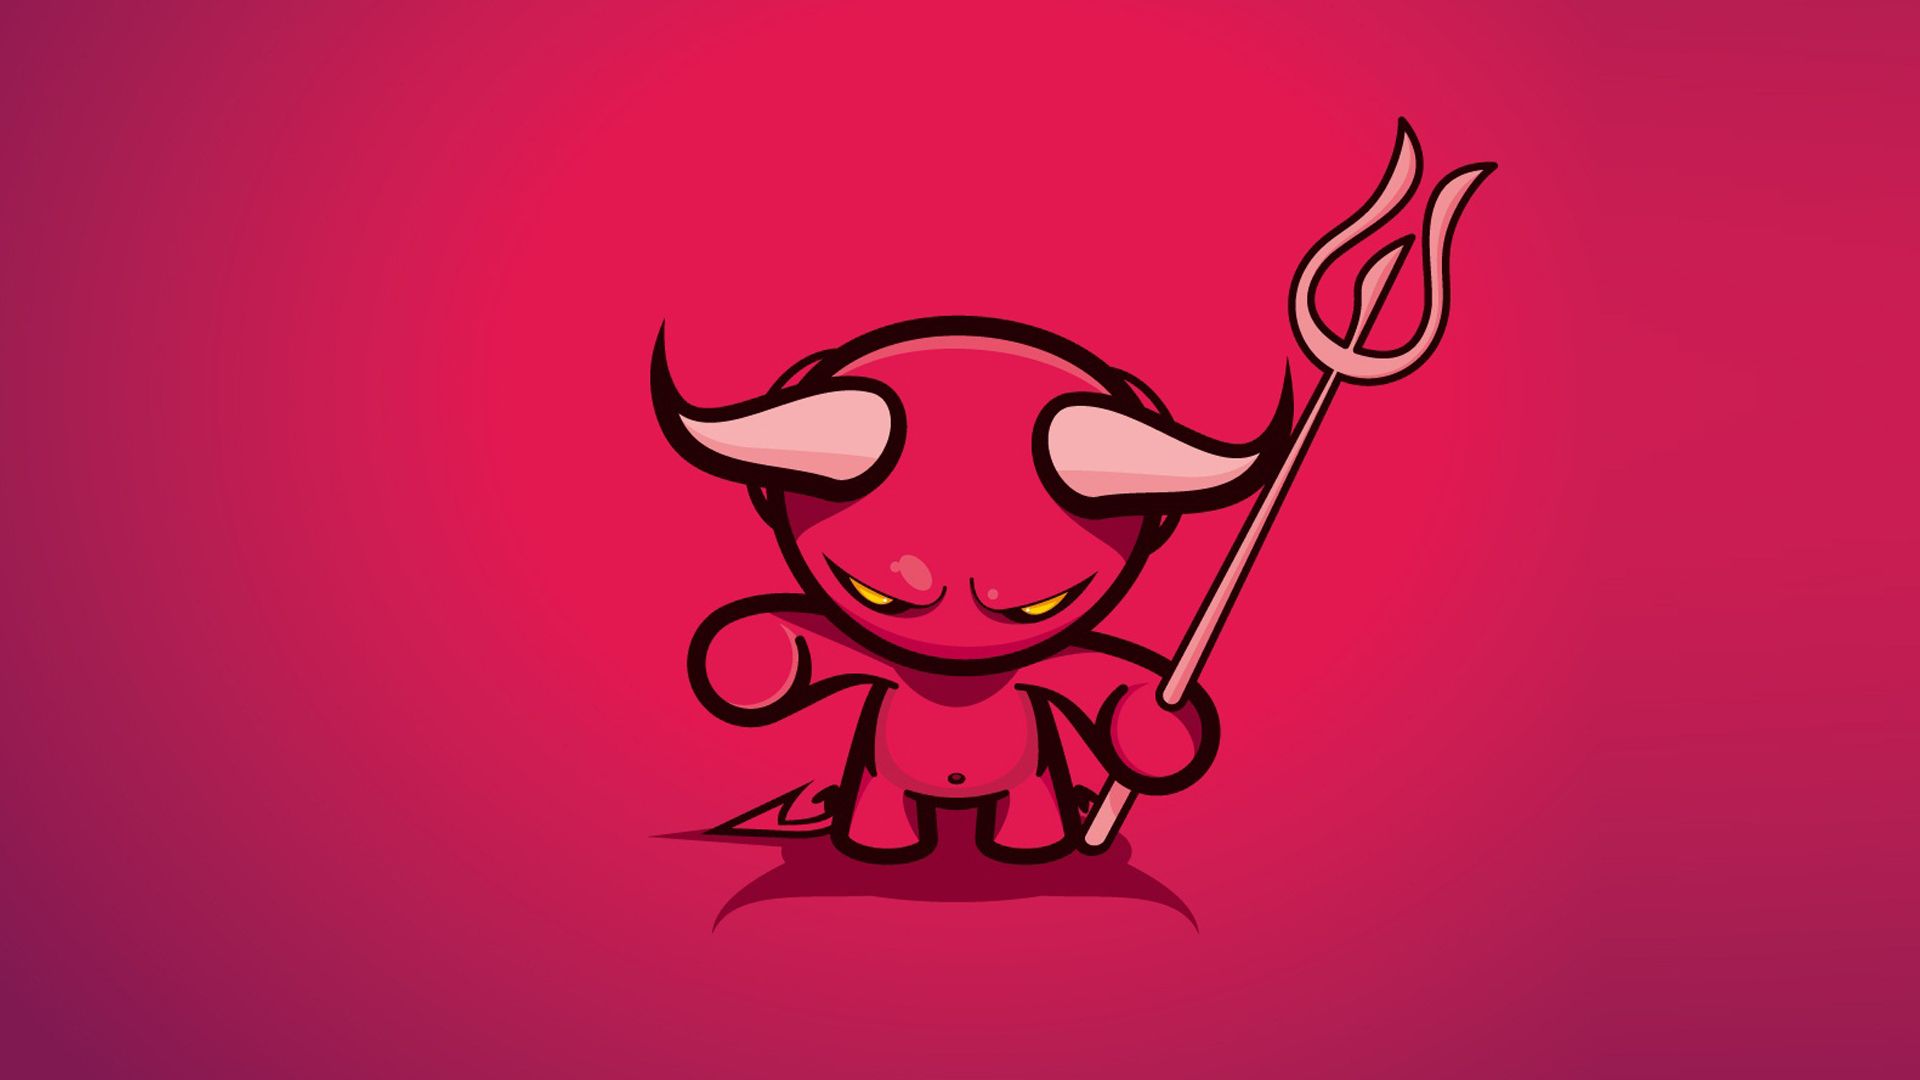 Small Devil Illustration for Desktop .allpicts.in